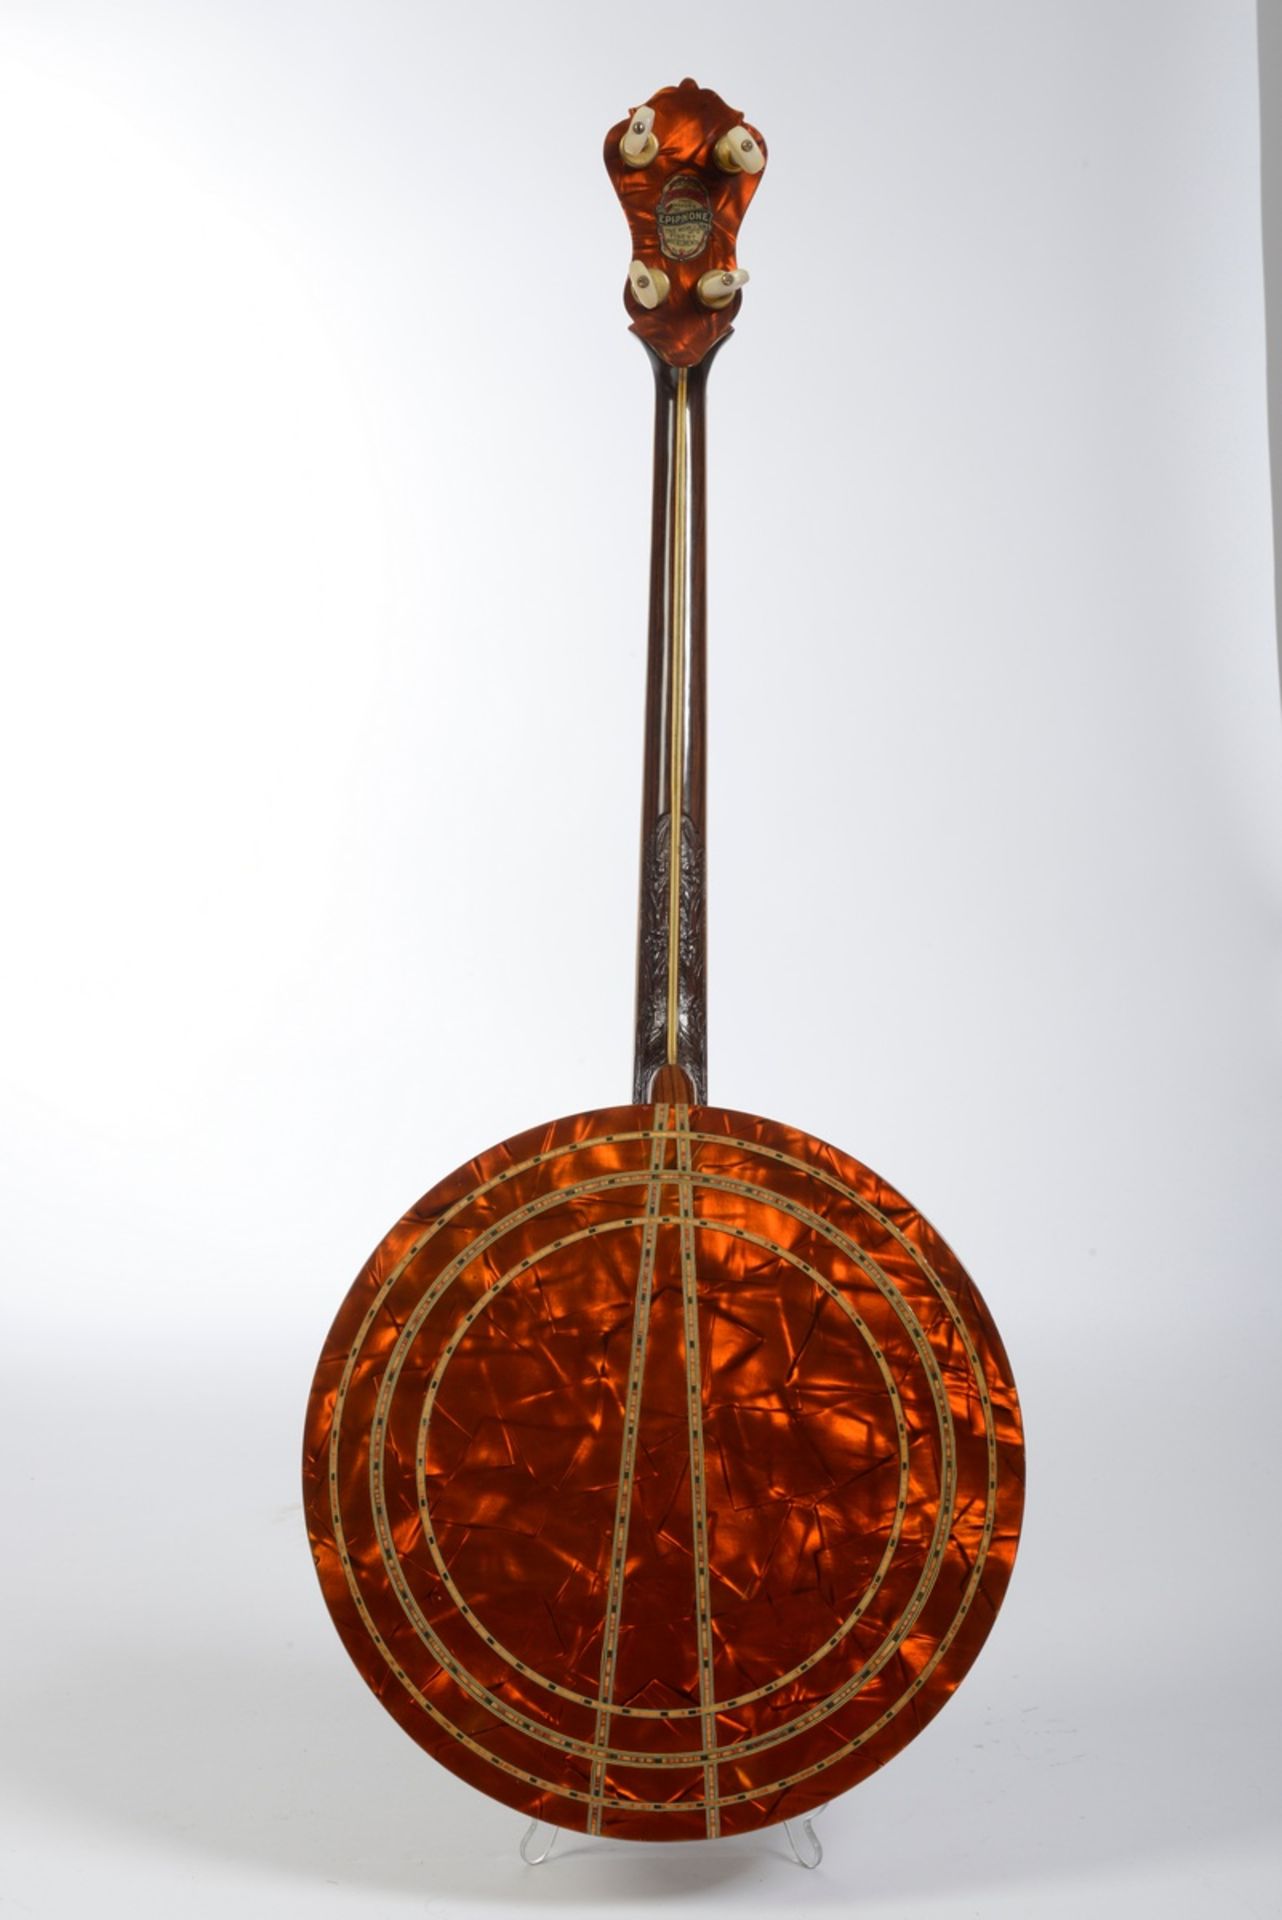 Tenor Banjo, Epiphone Banjo Company, House of Strathopoulo Inc. New York, model Recording Art Conce - Image 8 of 24